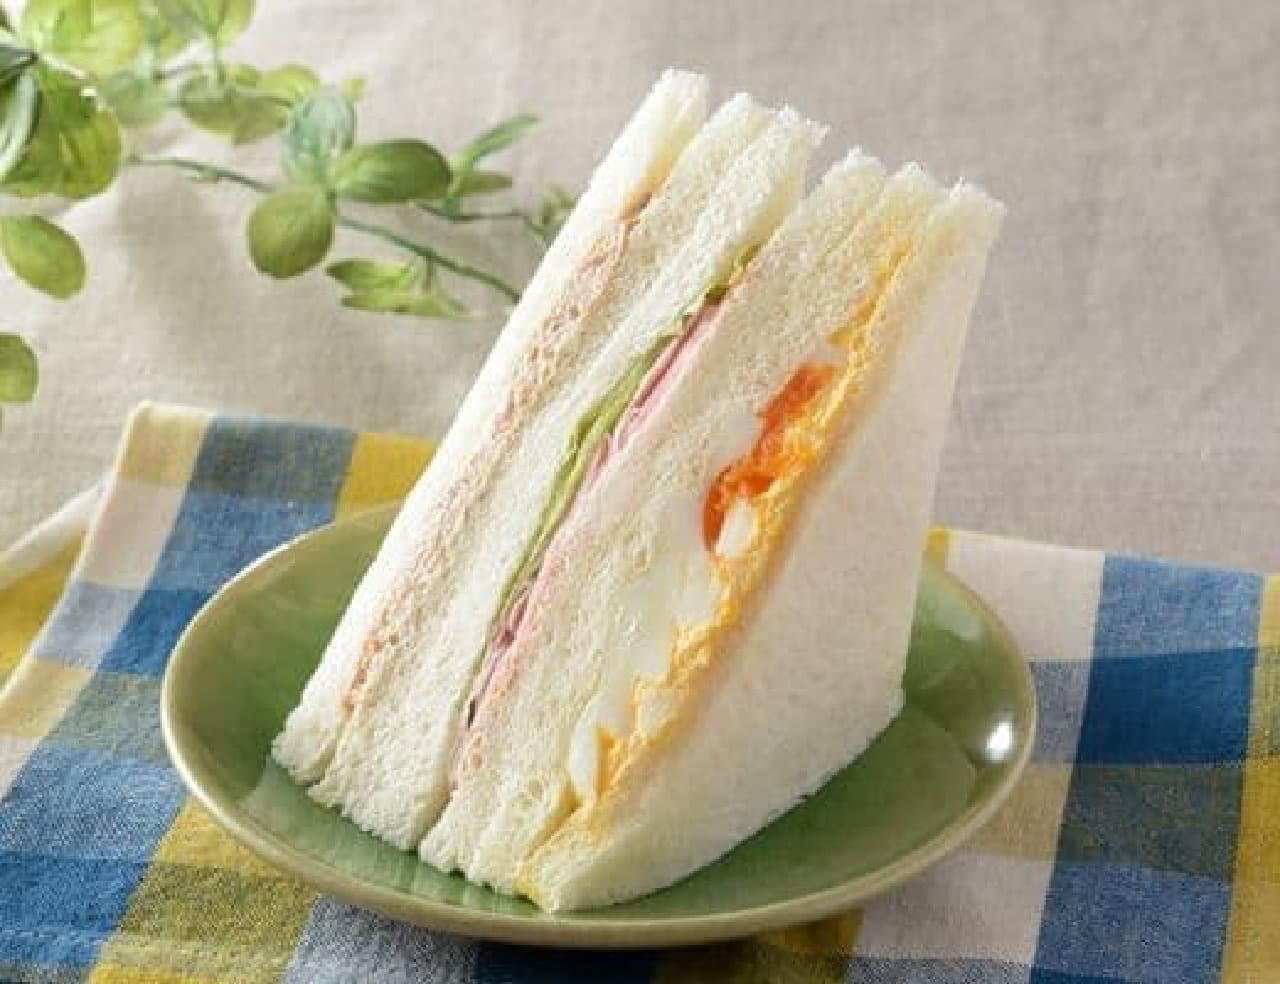 Lawson "Mixed Sandwich"